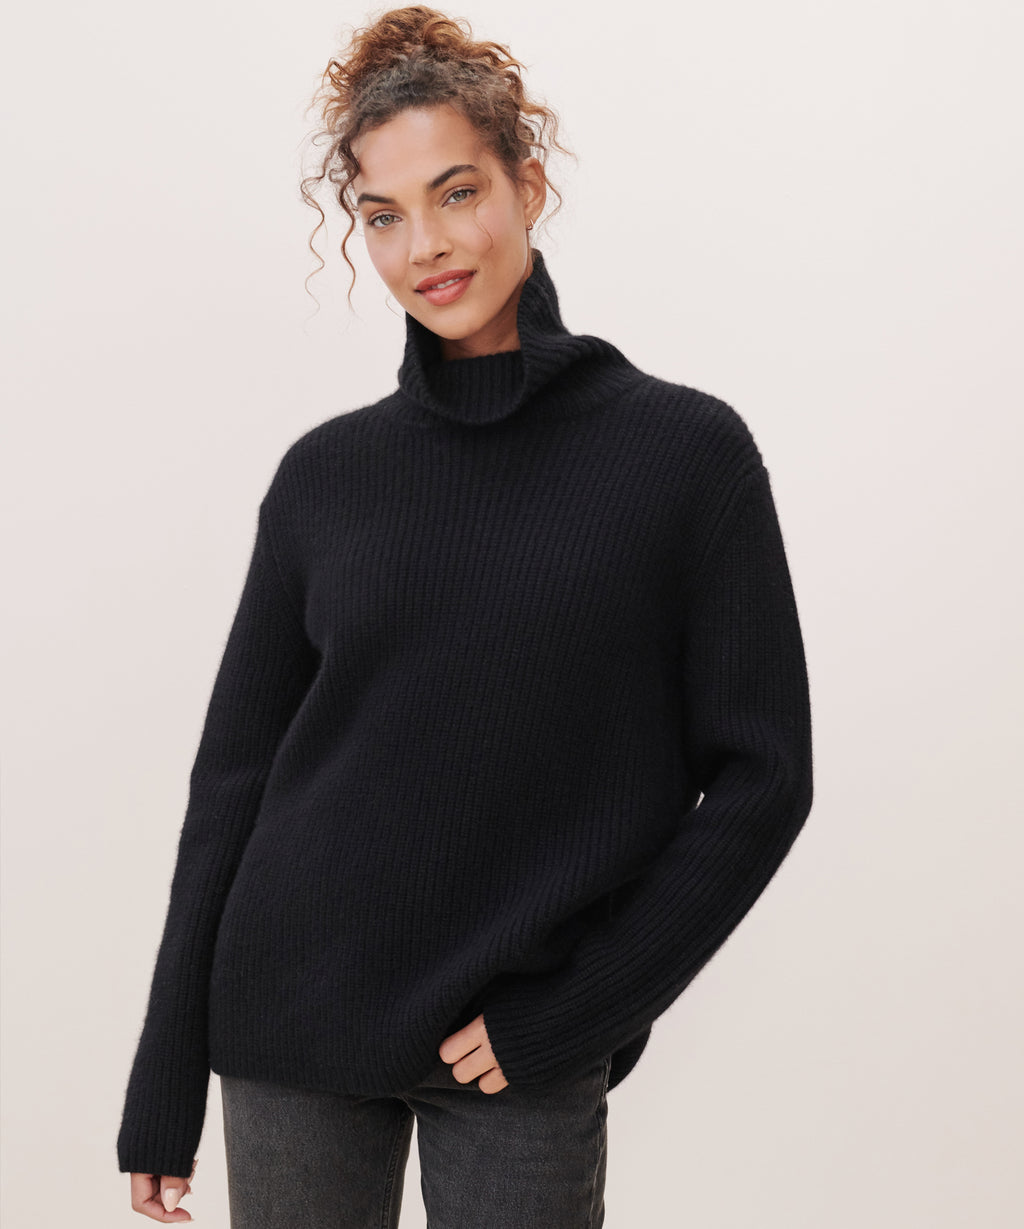 Cashmere Turtleneck Sweater - Black - Ladies